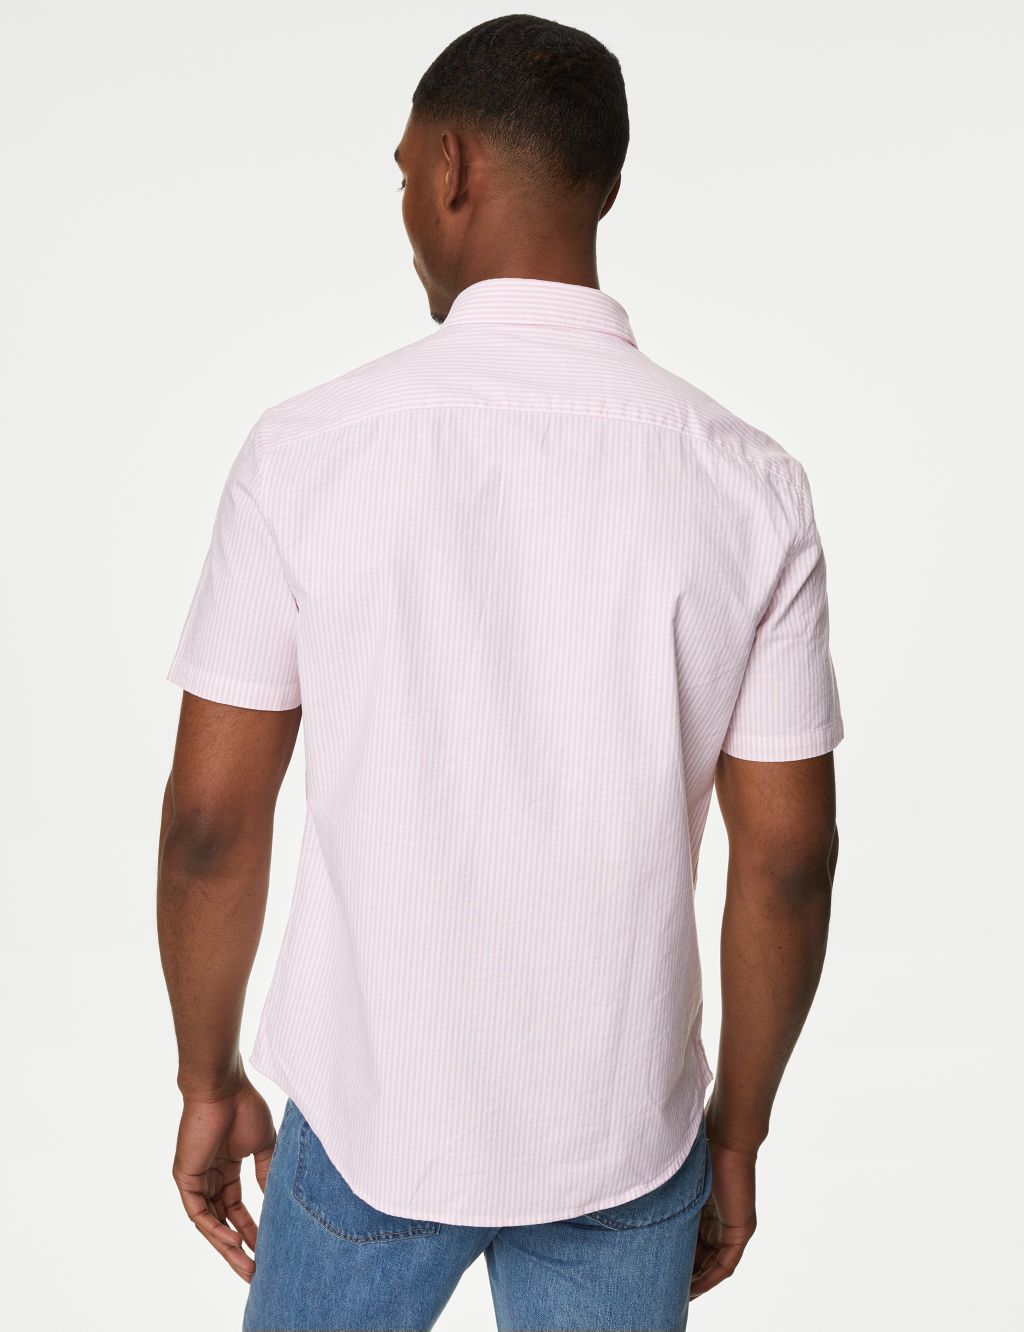 Pure Cotton Striped Oxford Shirt image 4